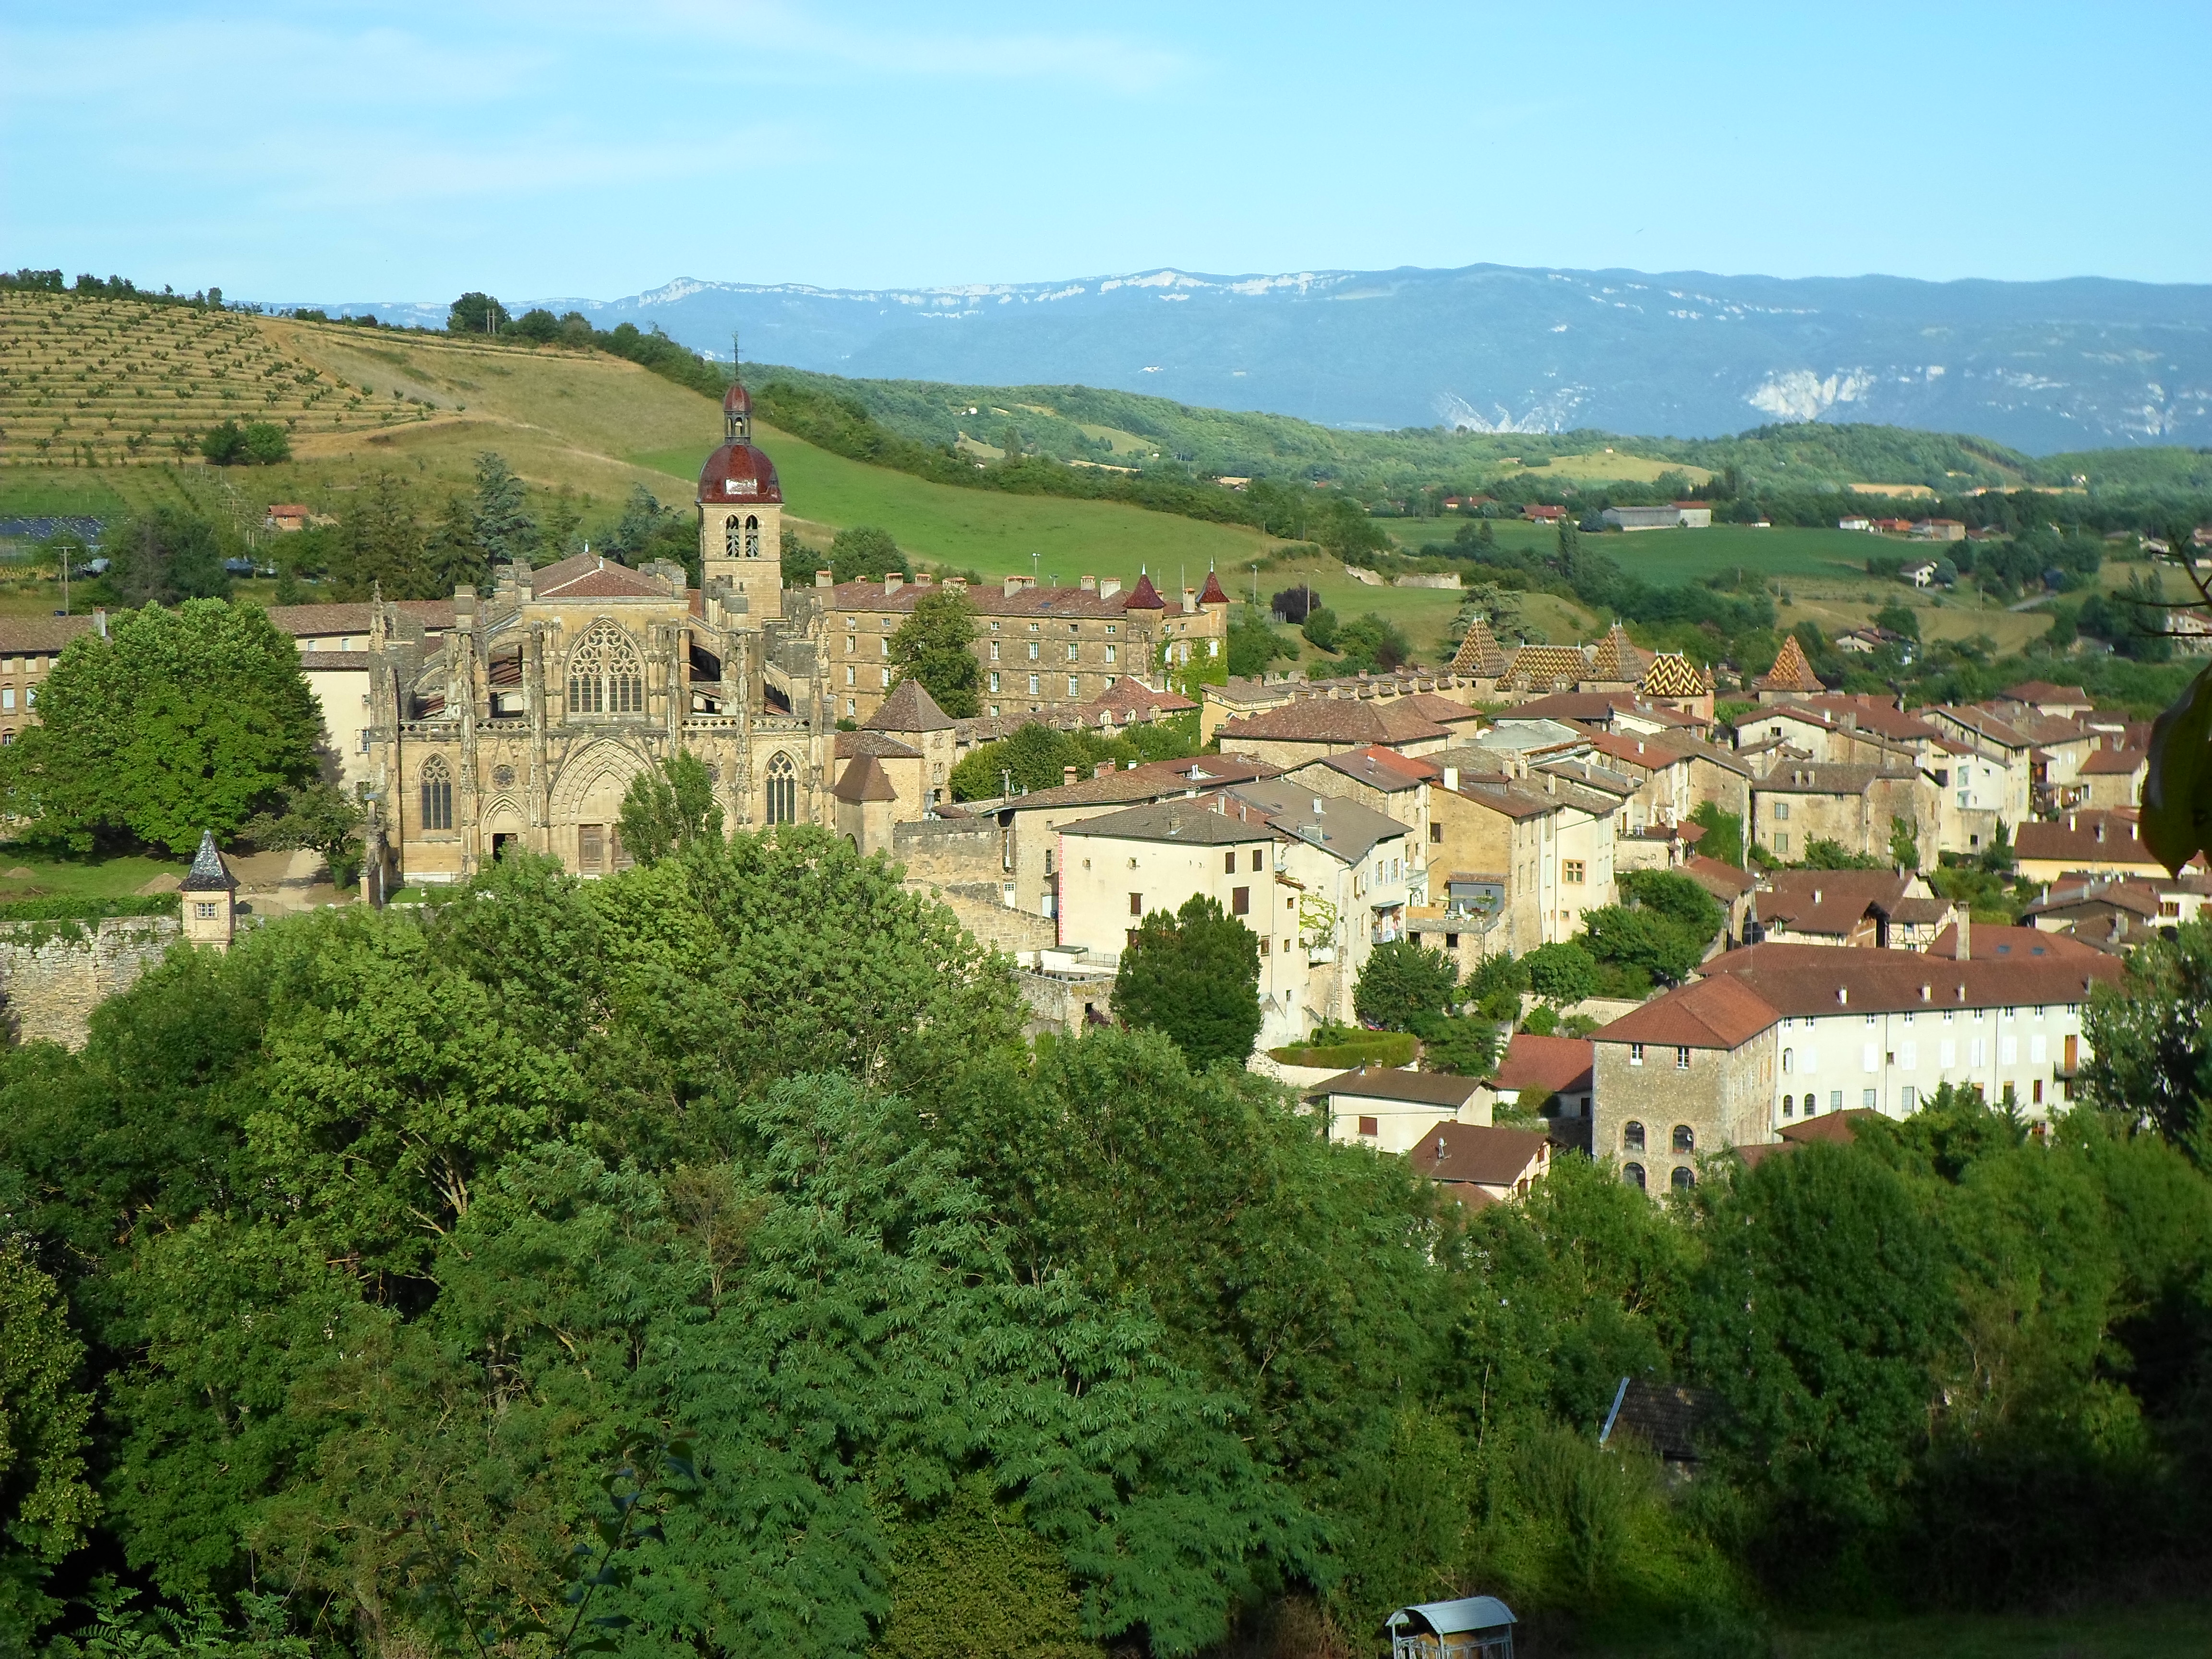 Saint-antoine-l'abbaye